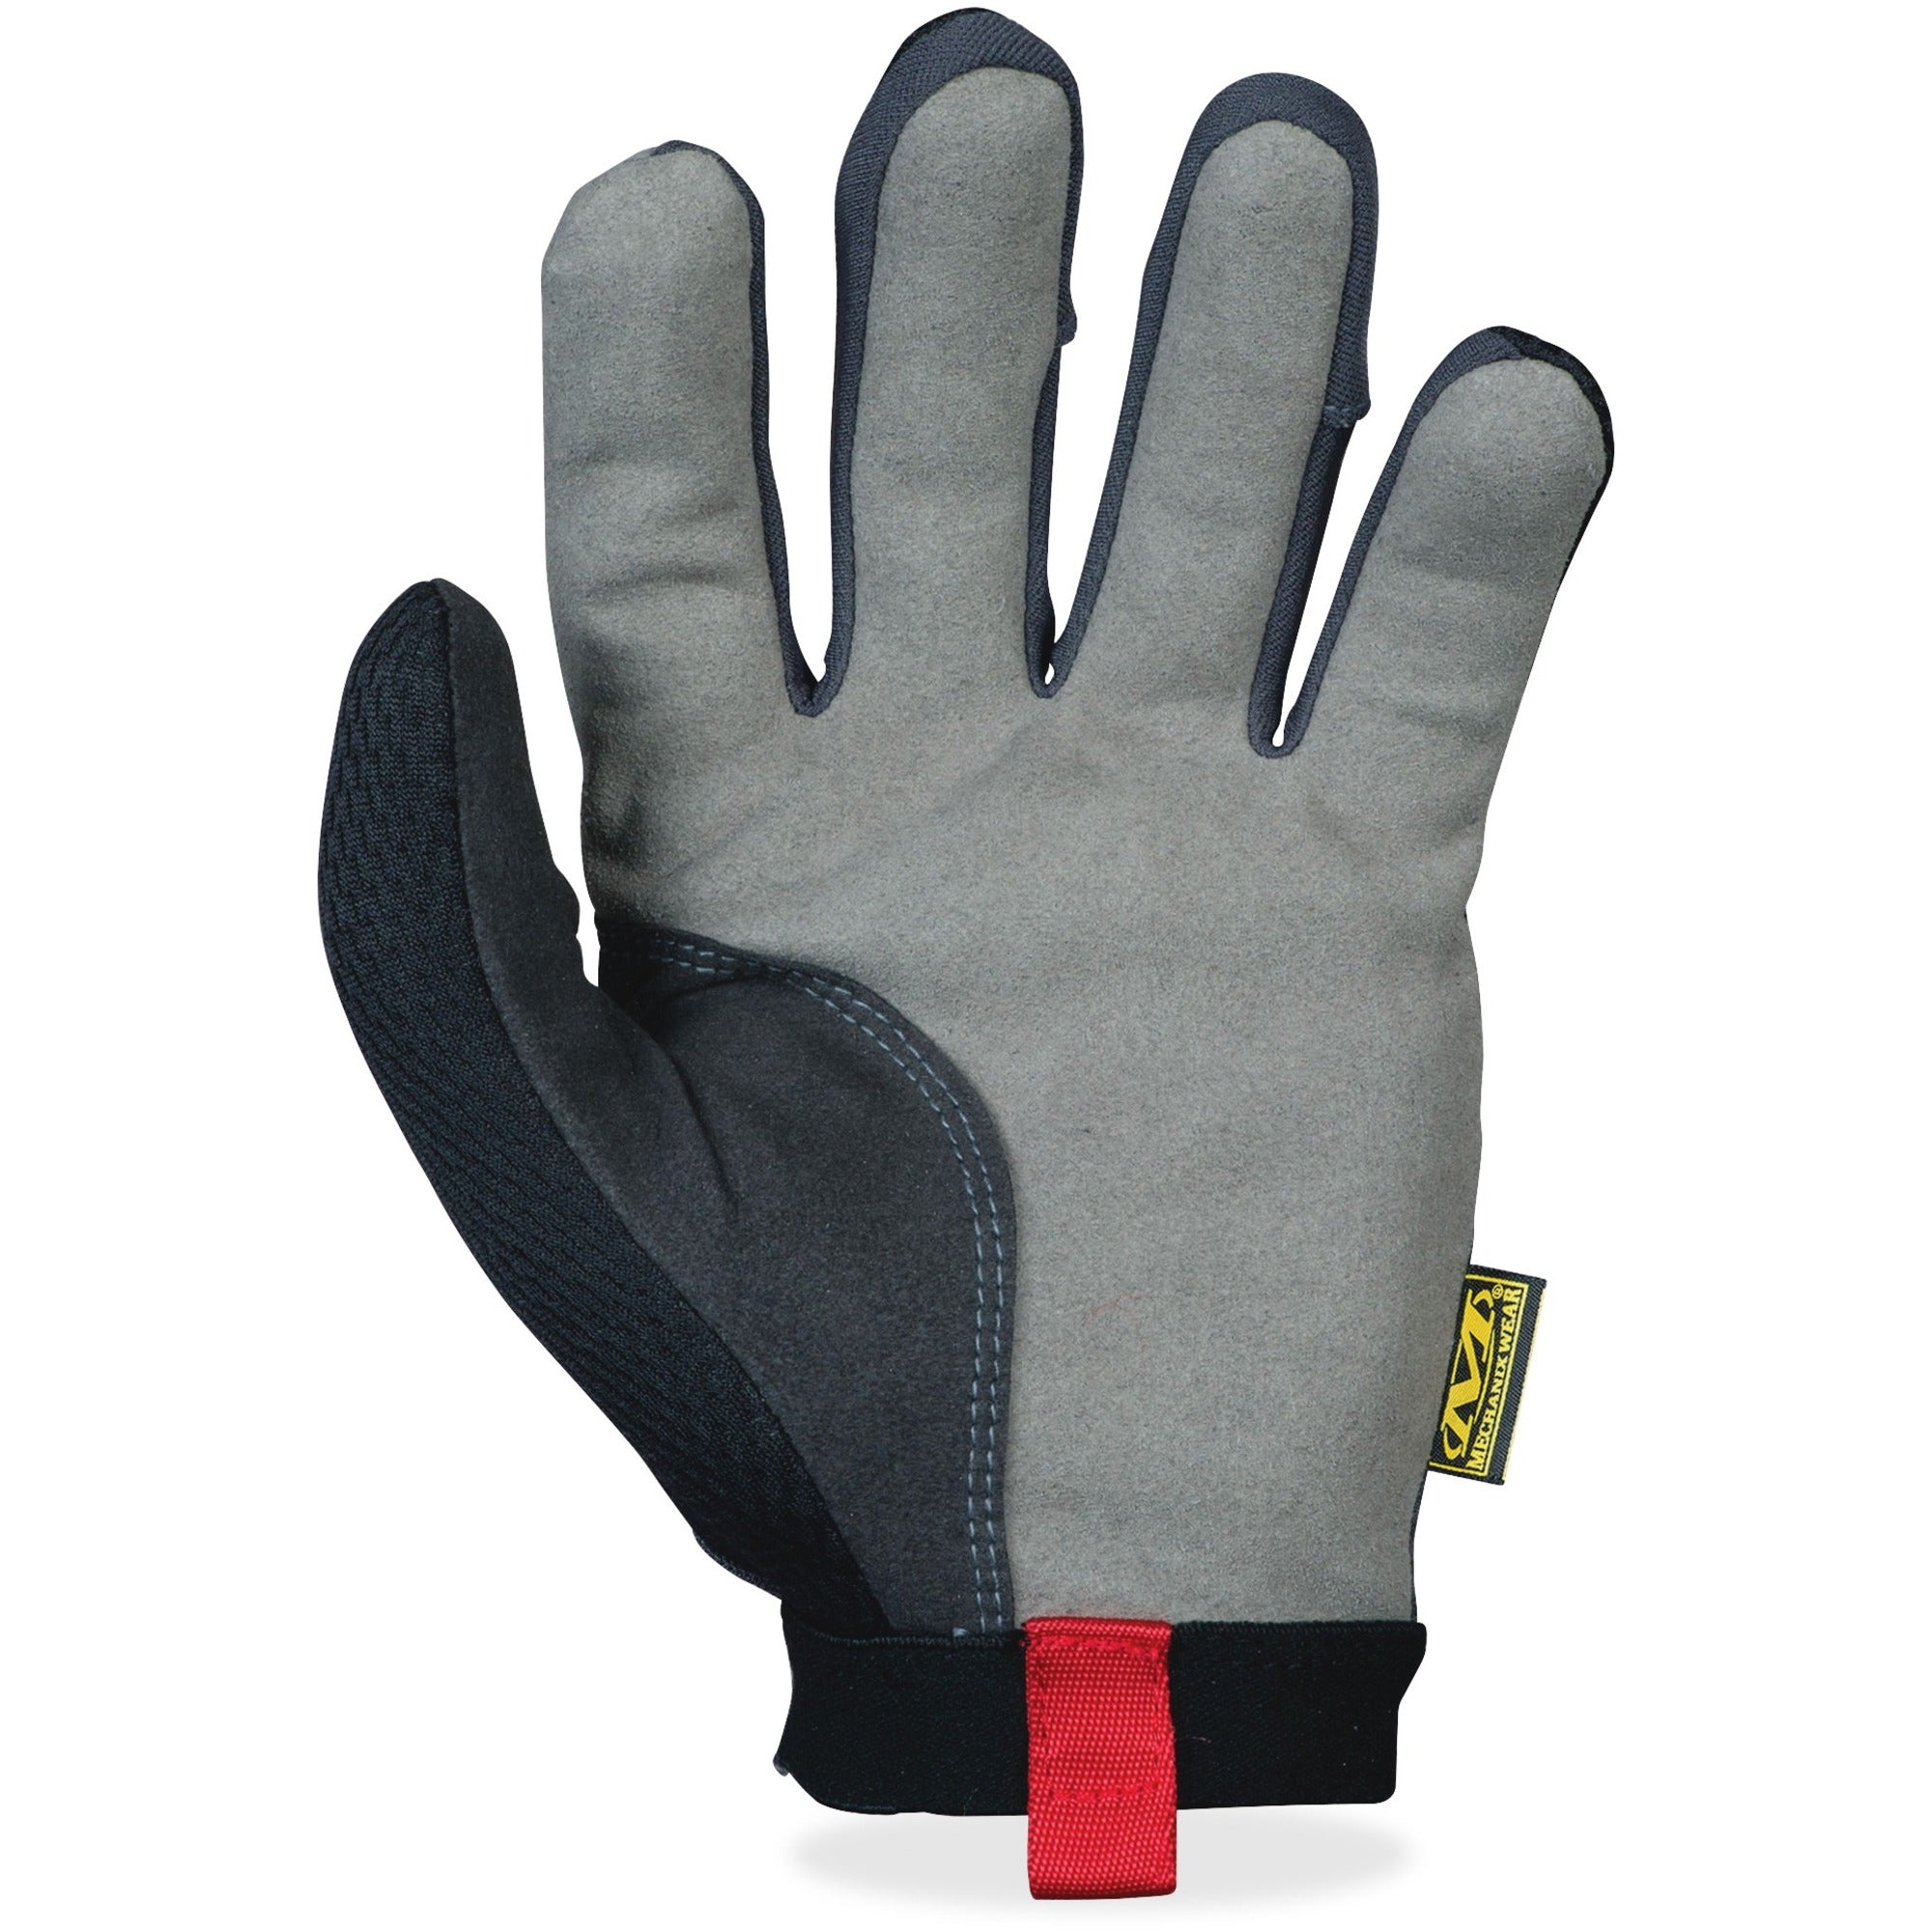 mechanix-wear-2-way-stretch-utility-gloves-9-size-number-medium-size-black-stretchable-air-vent-reinforced-palm-pad-snag-resistant-hook-&-loop-1-pair_mnxh1505009 - 1